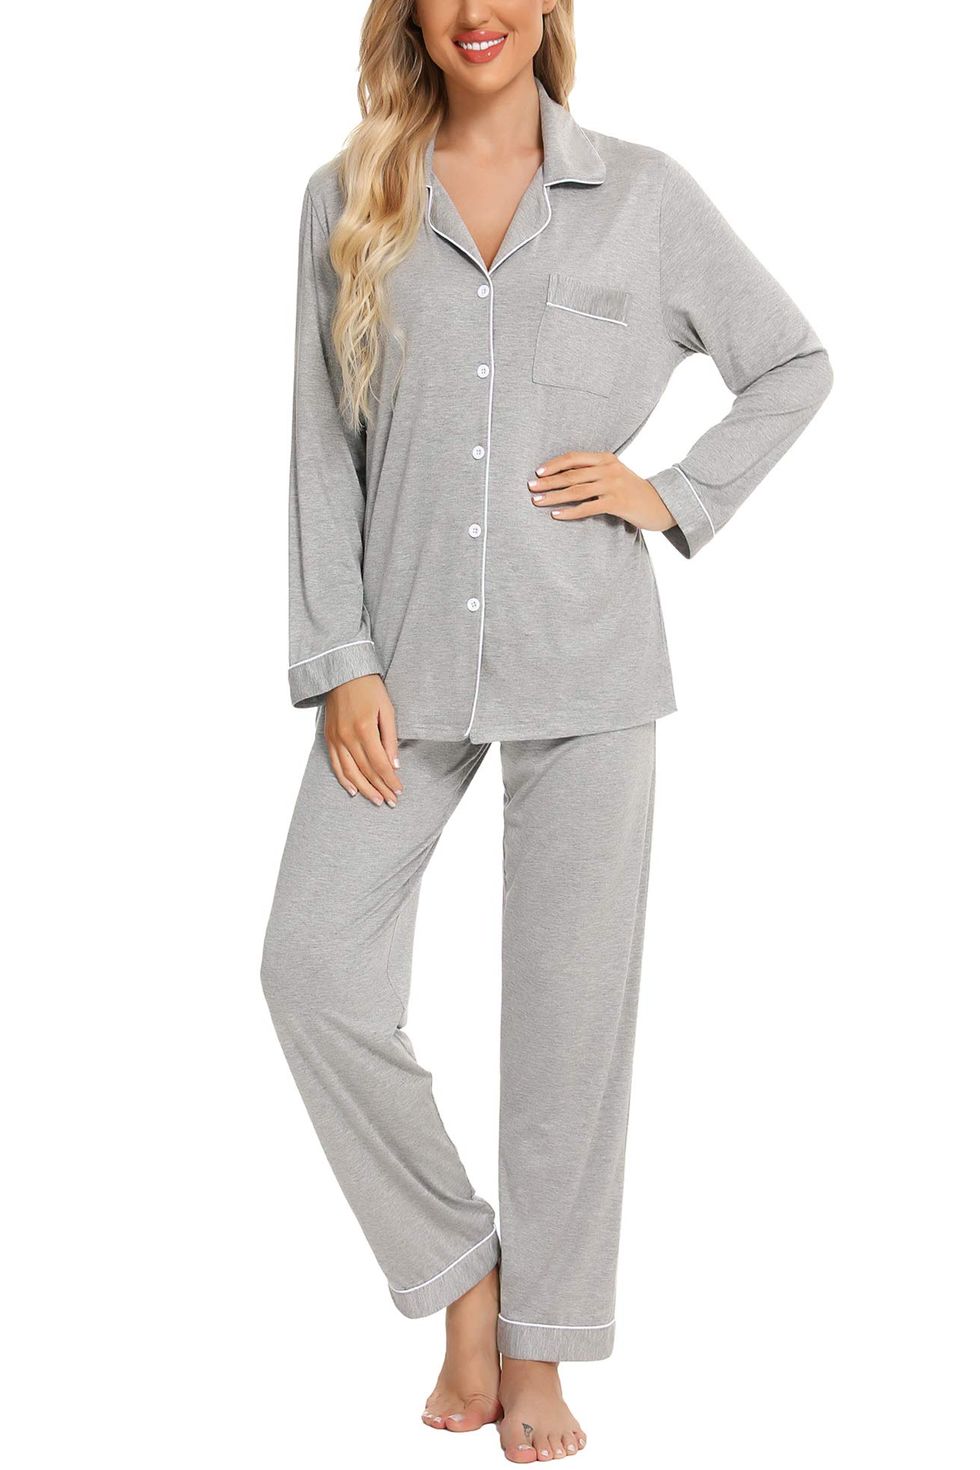 Women's Sleepwear Comfortable Two-piece Set Satin Feather Print Long Sleeve  Pocket Button Upt Tops & Pants Pajama Set